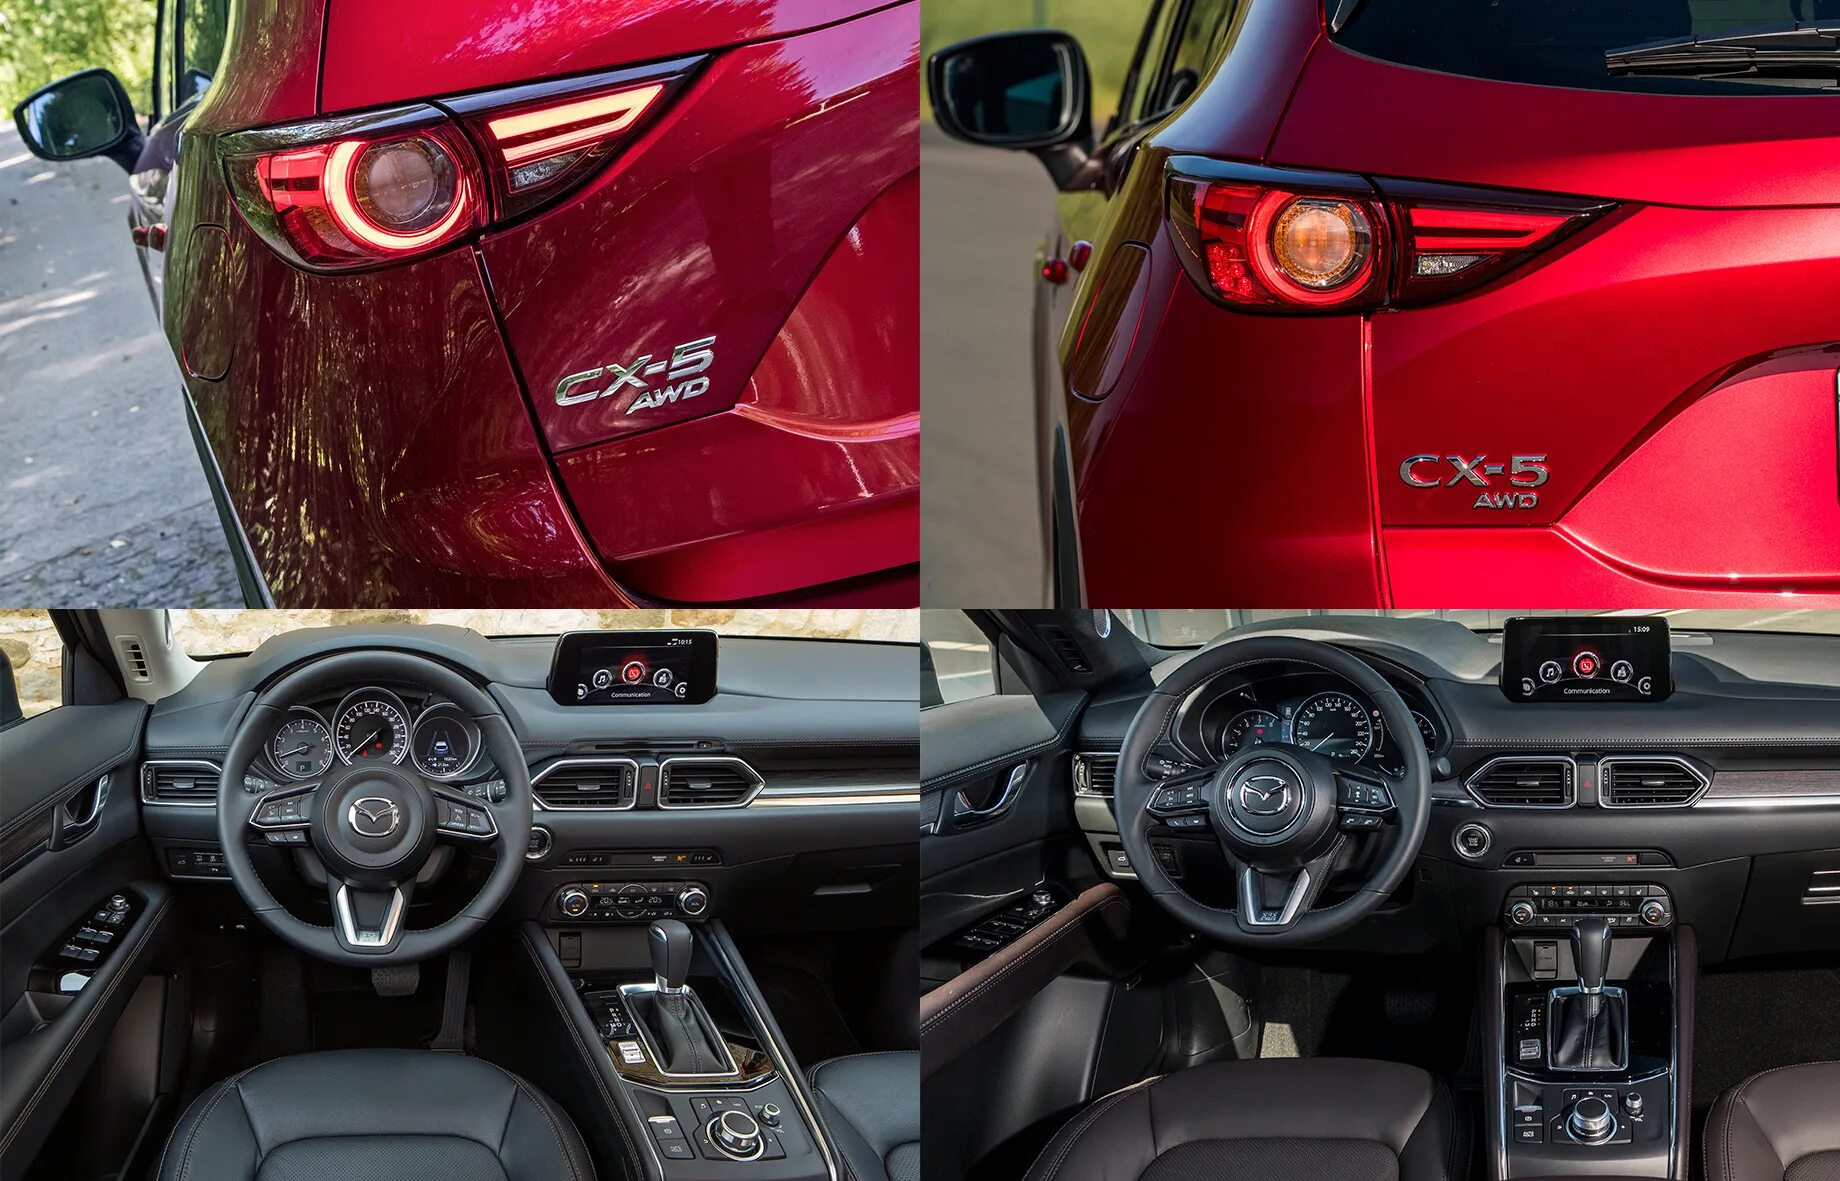 Mazda CX-5 2020. Мазда cx5 2020. Mazda CX 5 2020 салон. Mazda CX 5 салон. Отличия мазда сх5